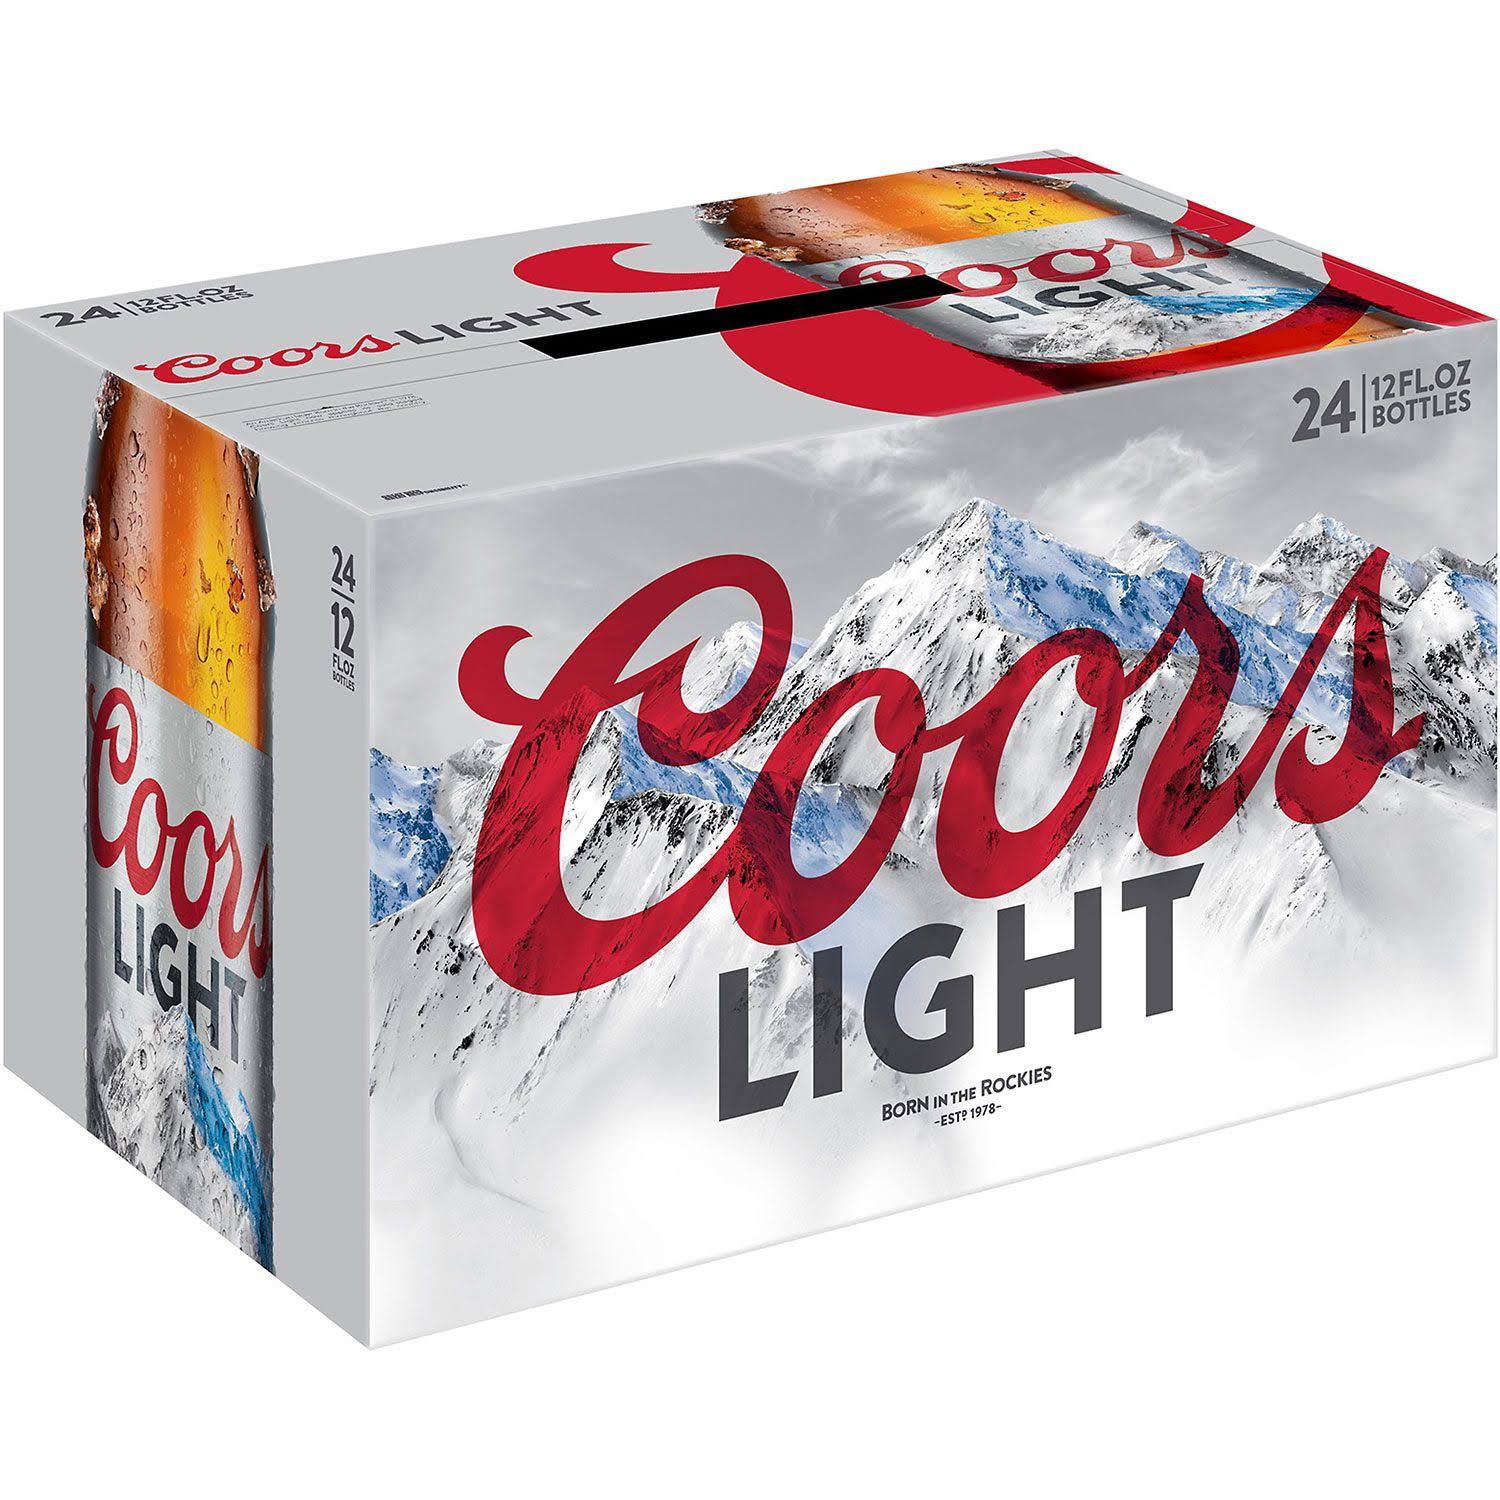 Coors Light Beer - 24x12oz